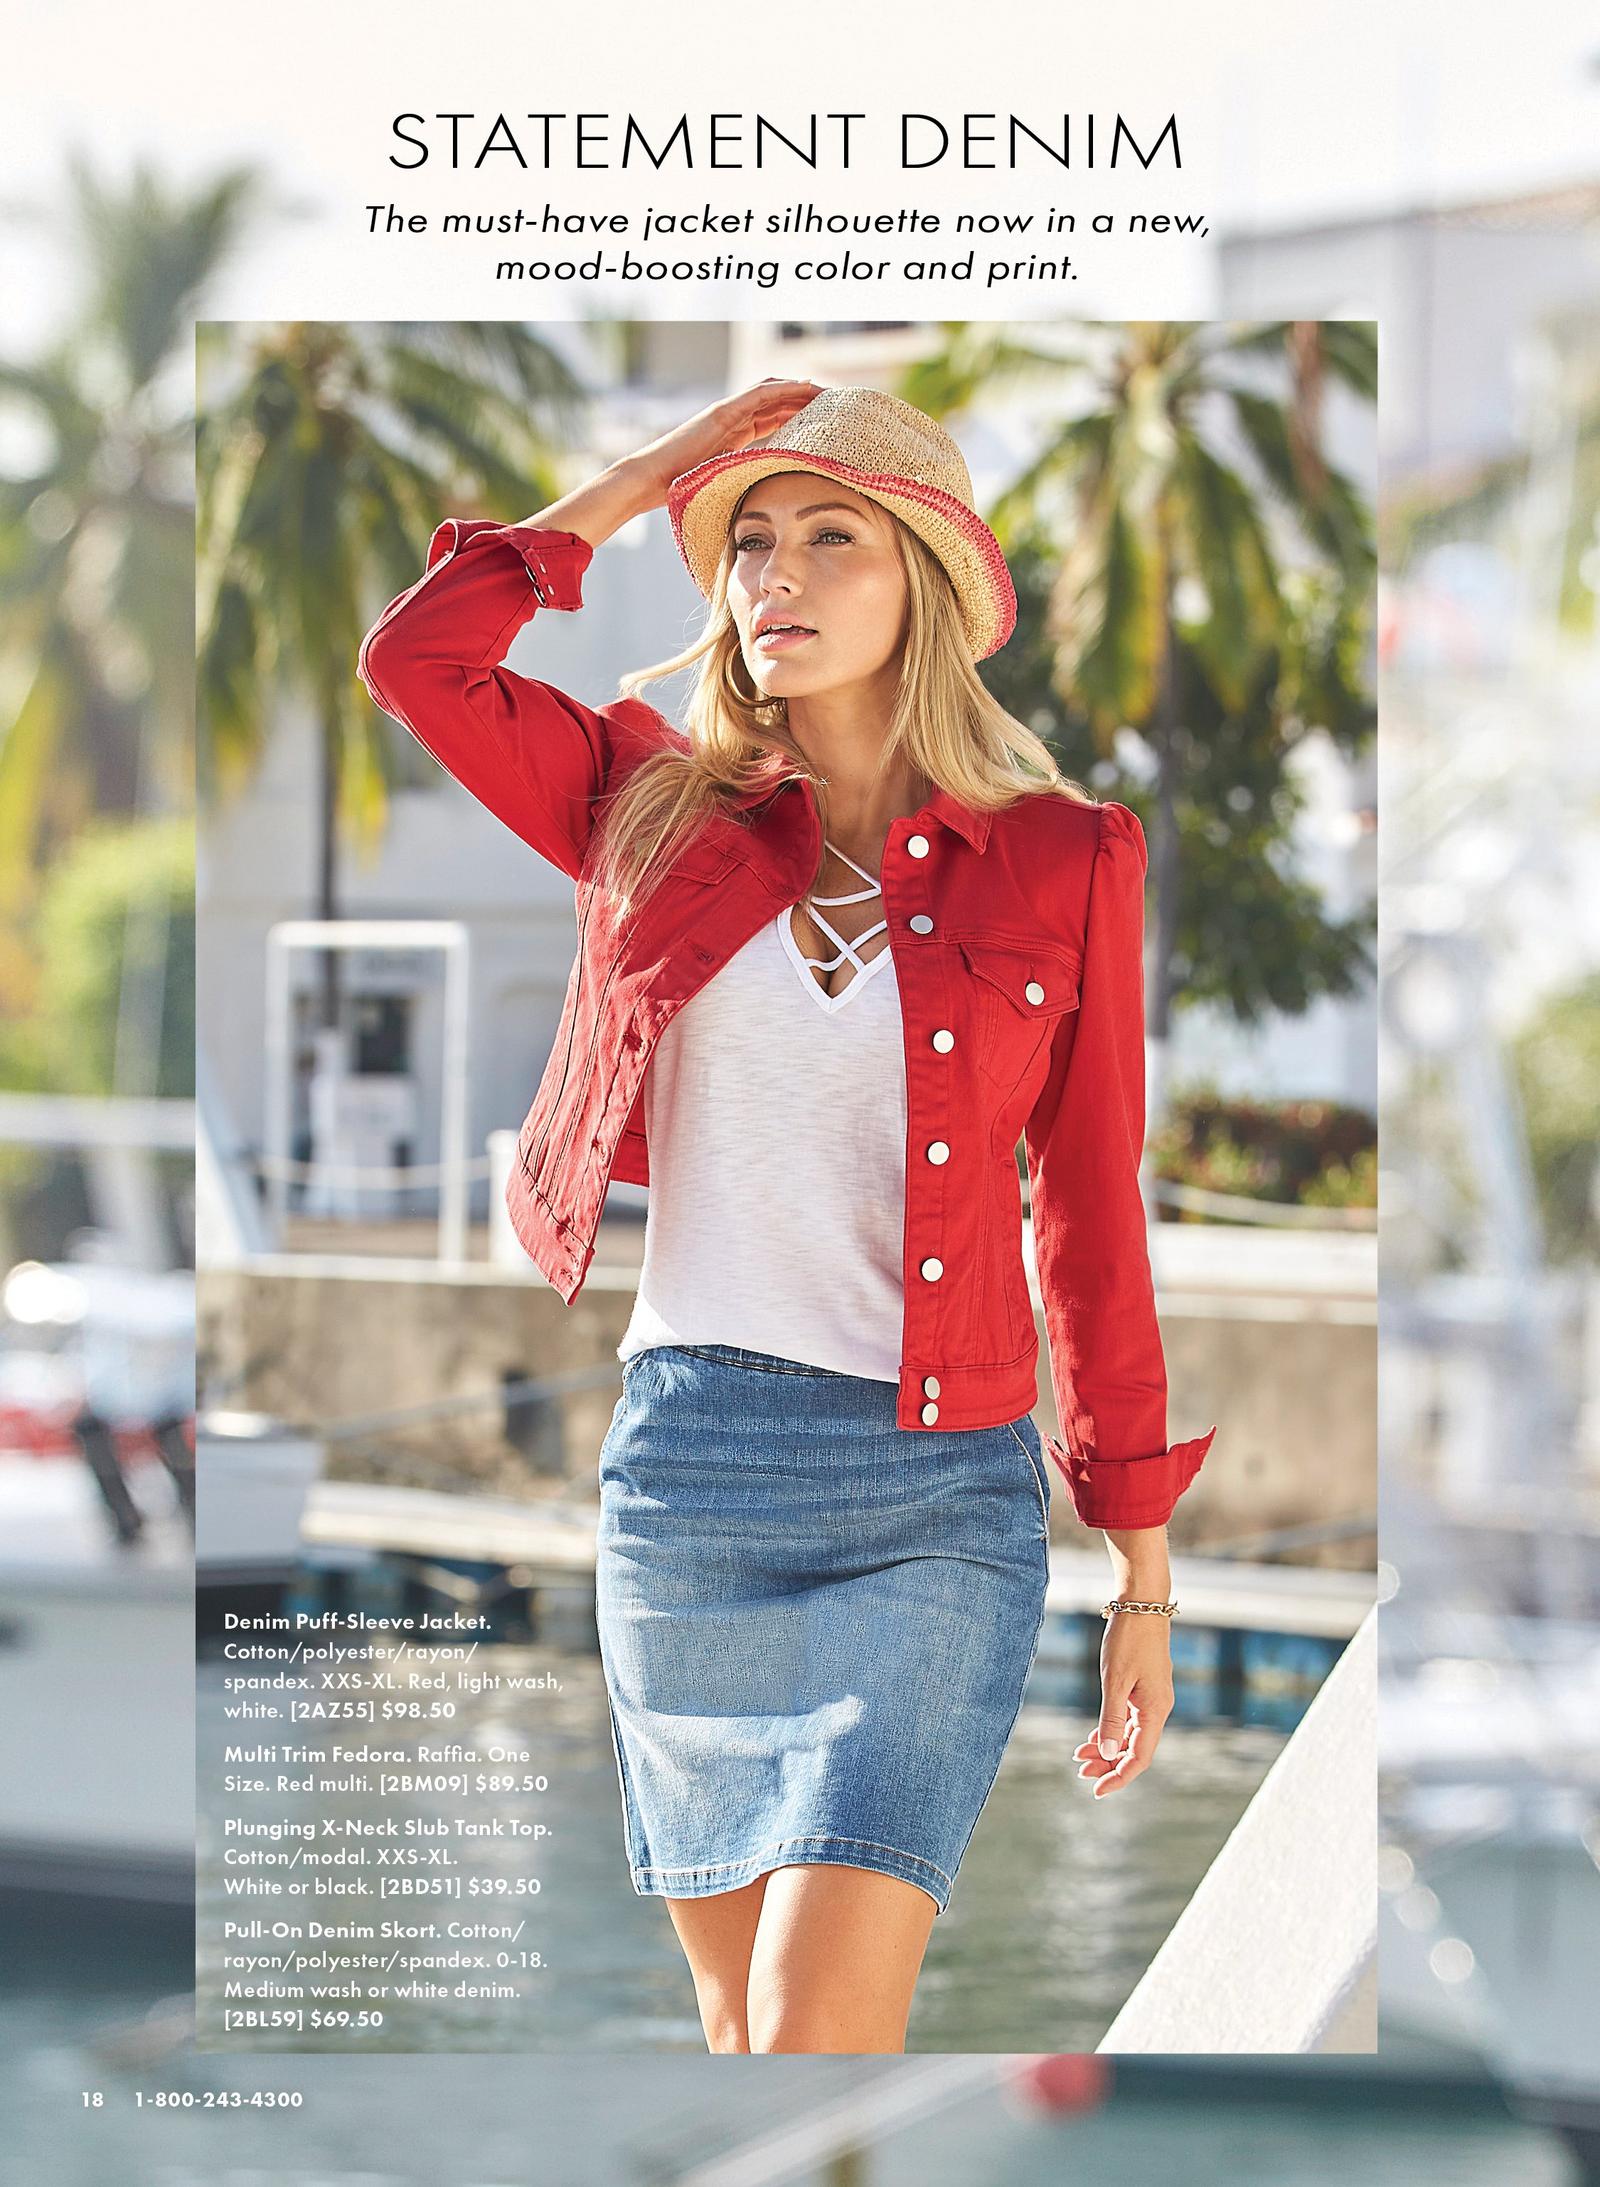 model wearing a red denim puff-sleeve jacket, white x-neck tank top, denim skirt, and fedora hat.